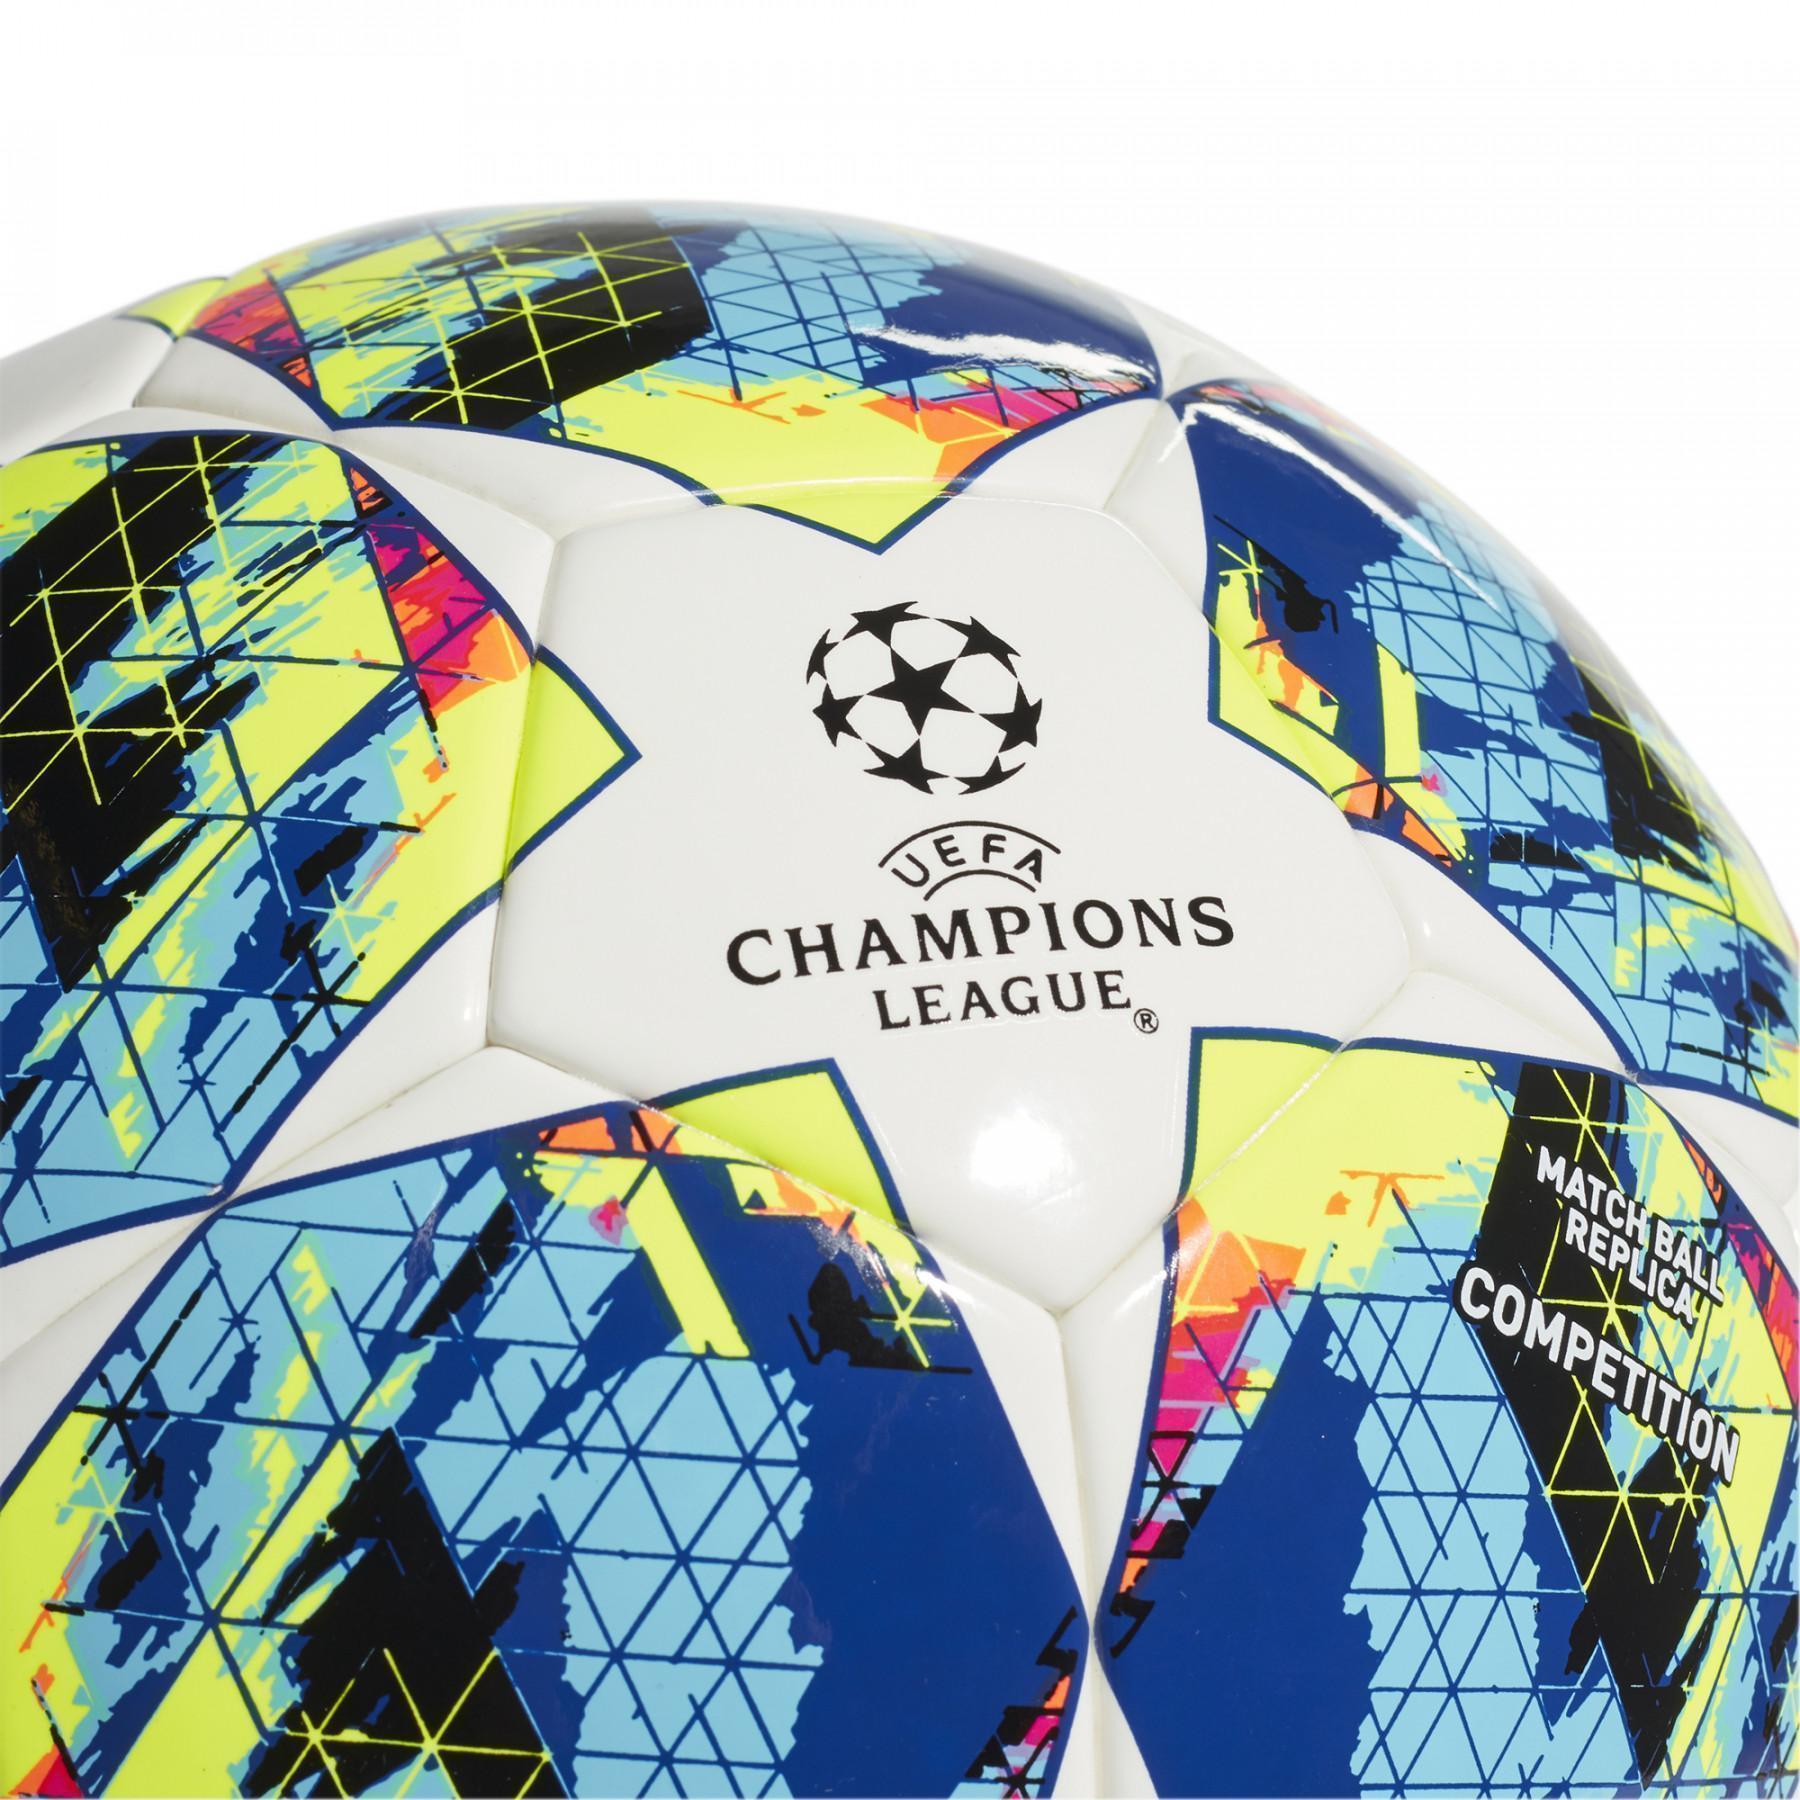 Pallone adidas Finale Champions League 2020